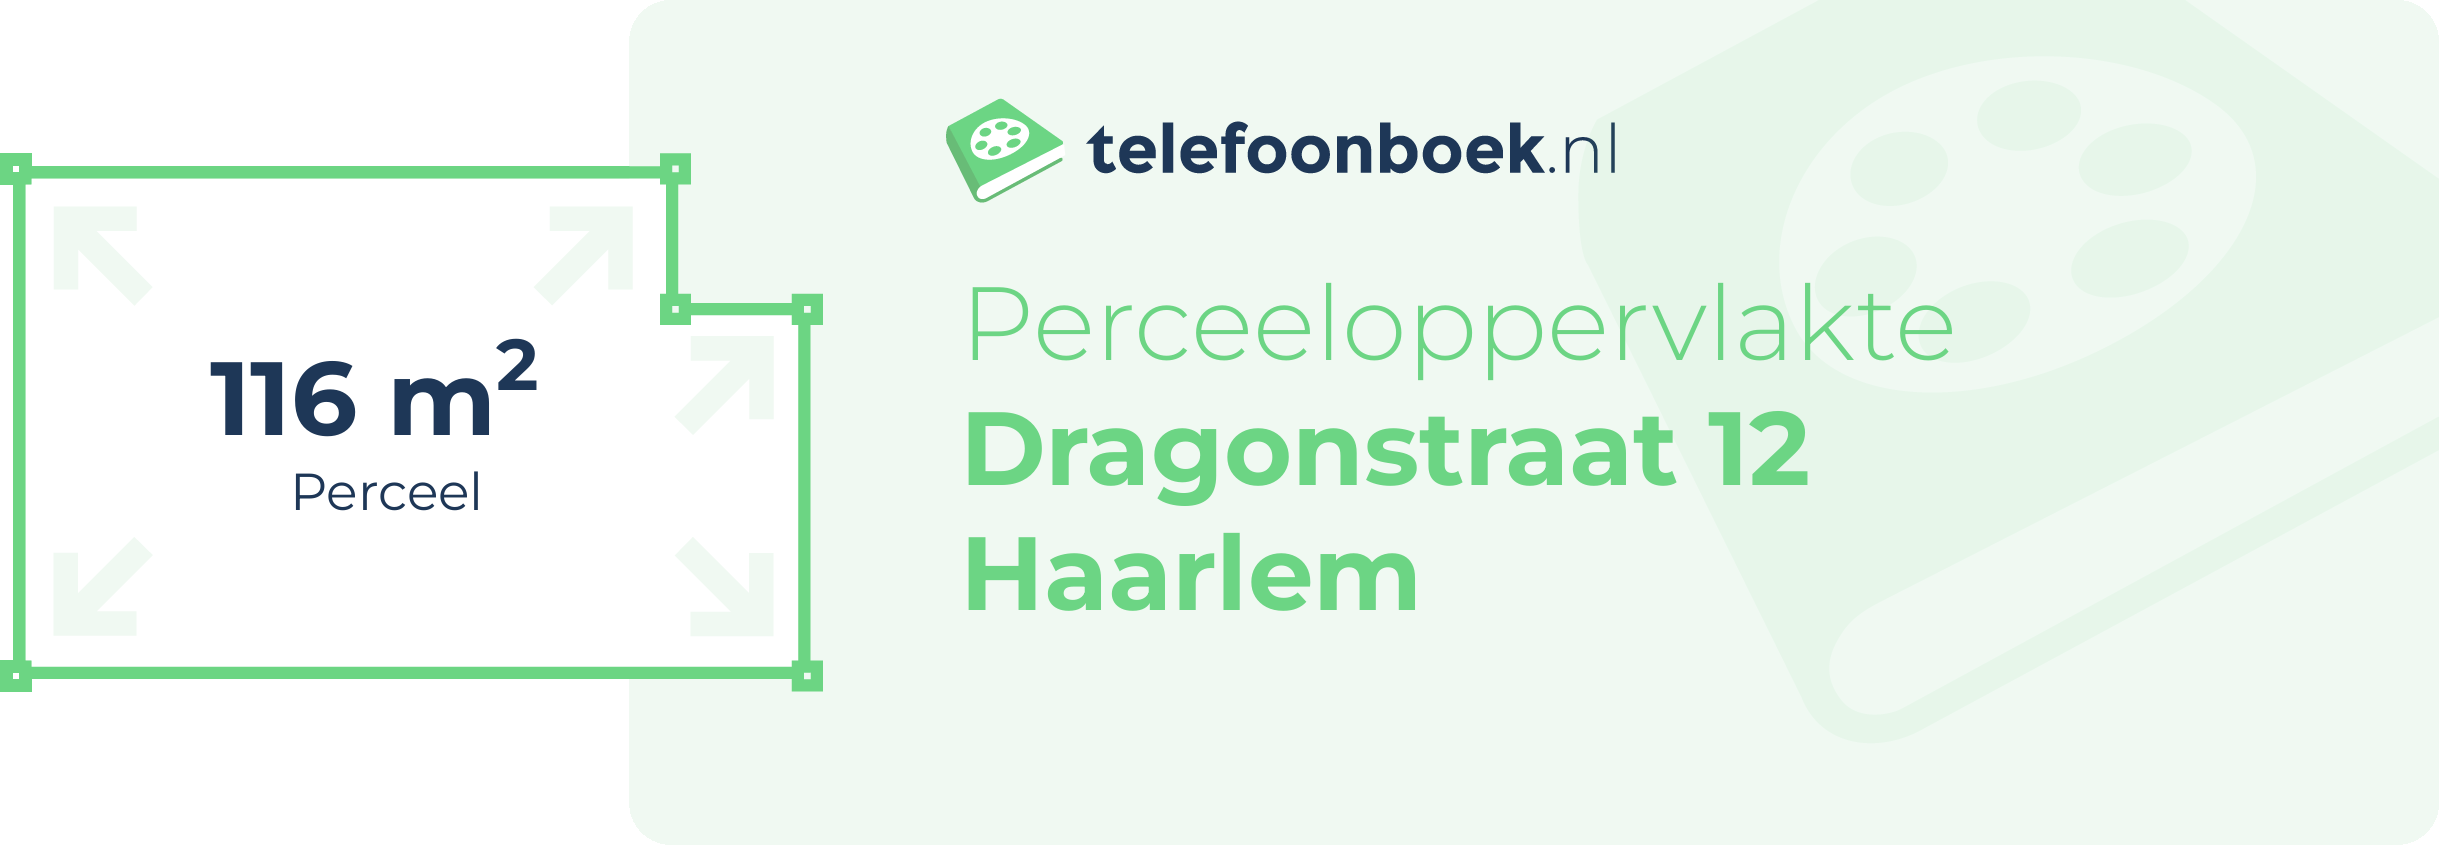 Perceeloppervlakte Dragonstraat 12 Haarlem